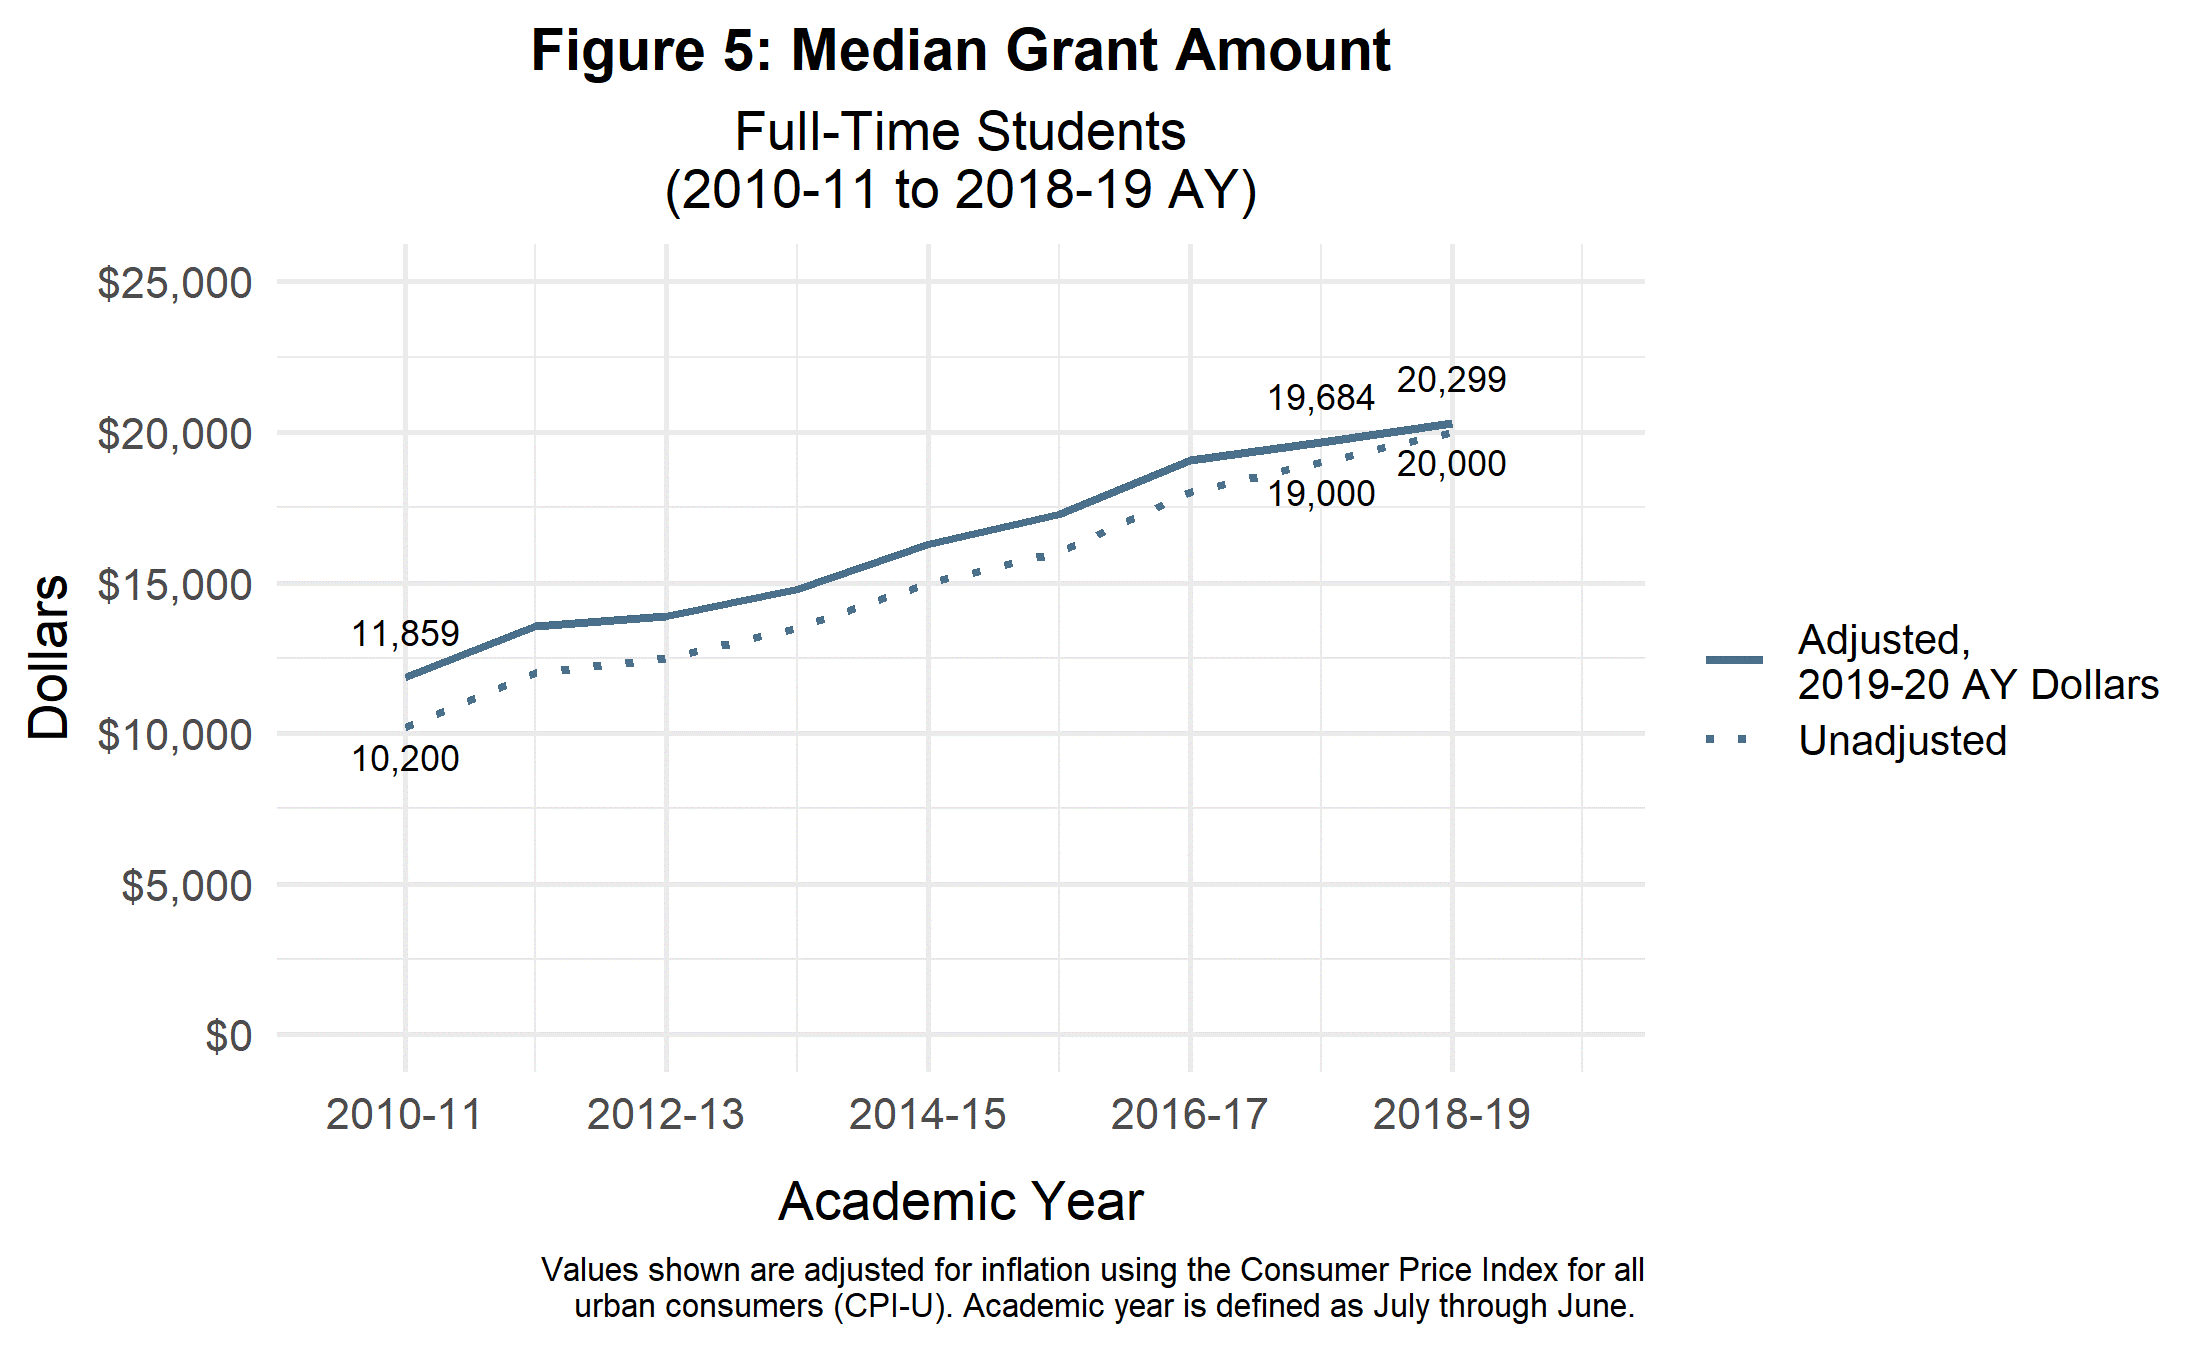 Median Grant Amount